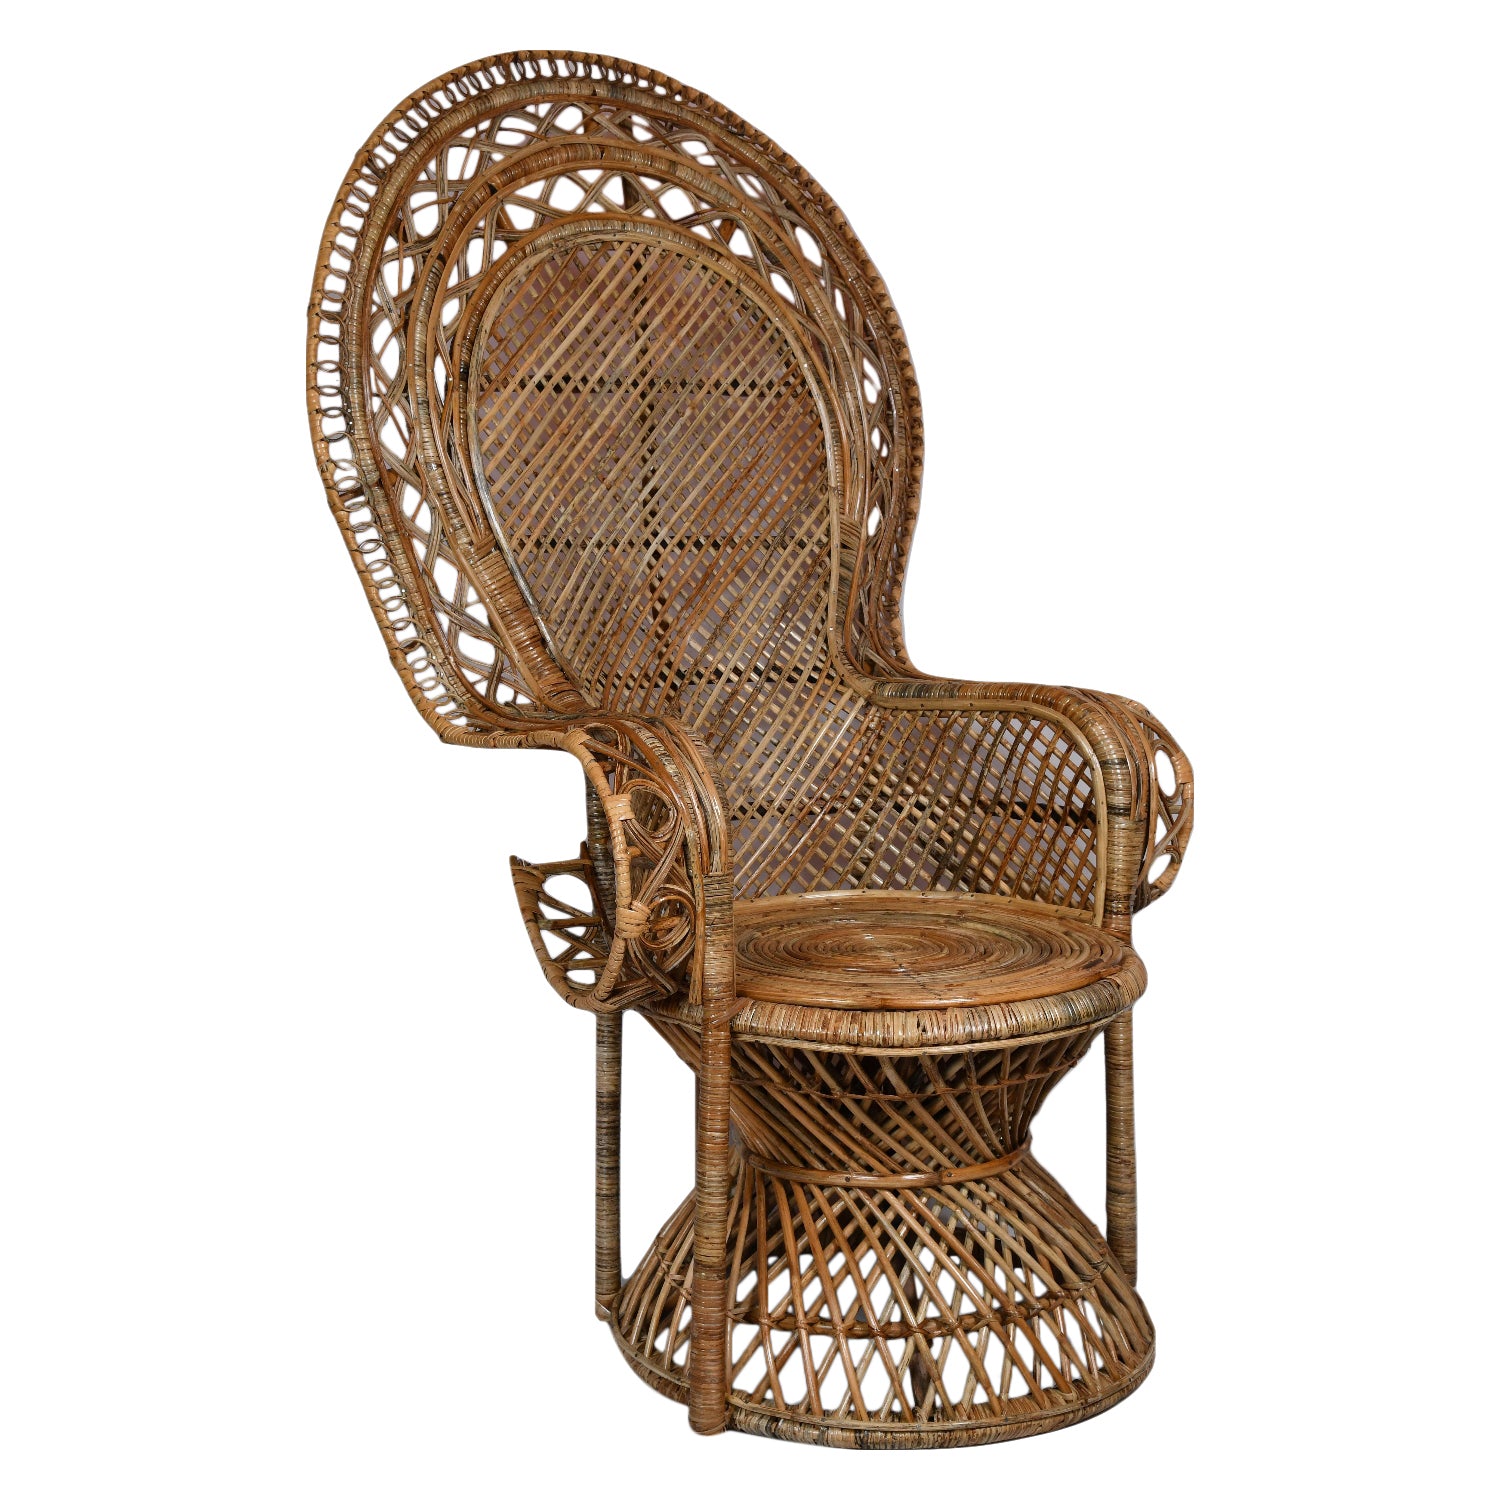 Cane Royal Peacock Chair